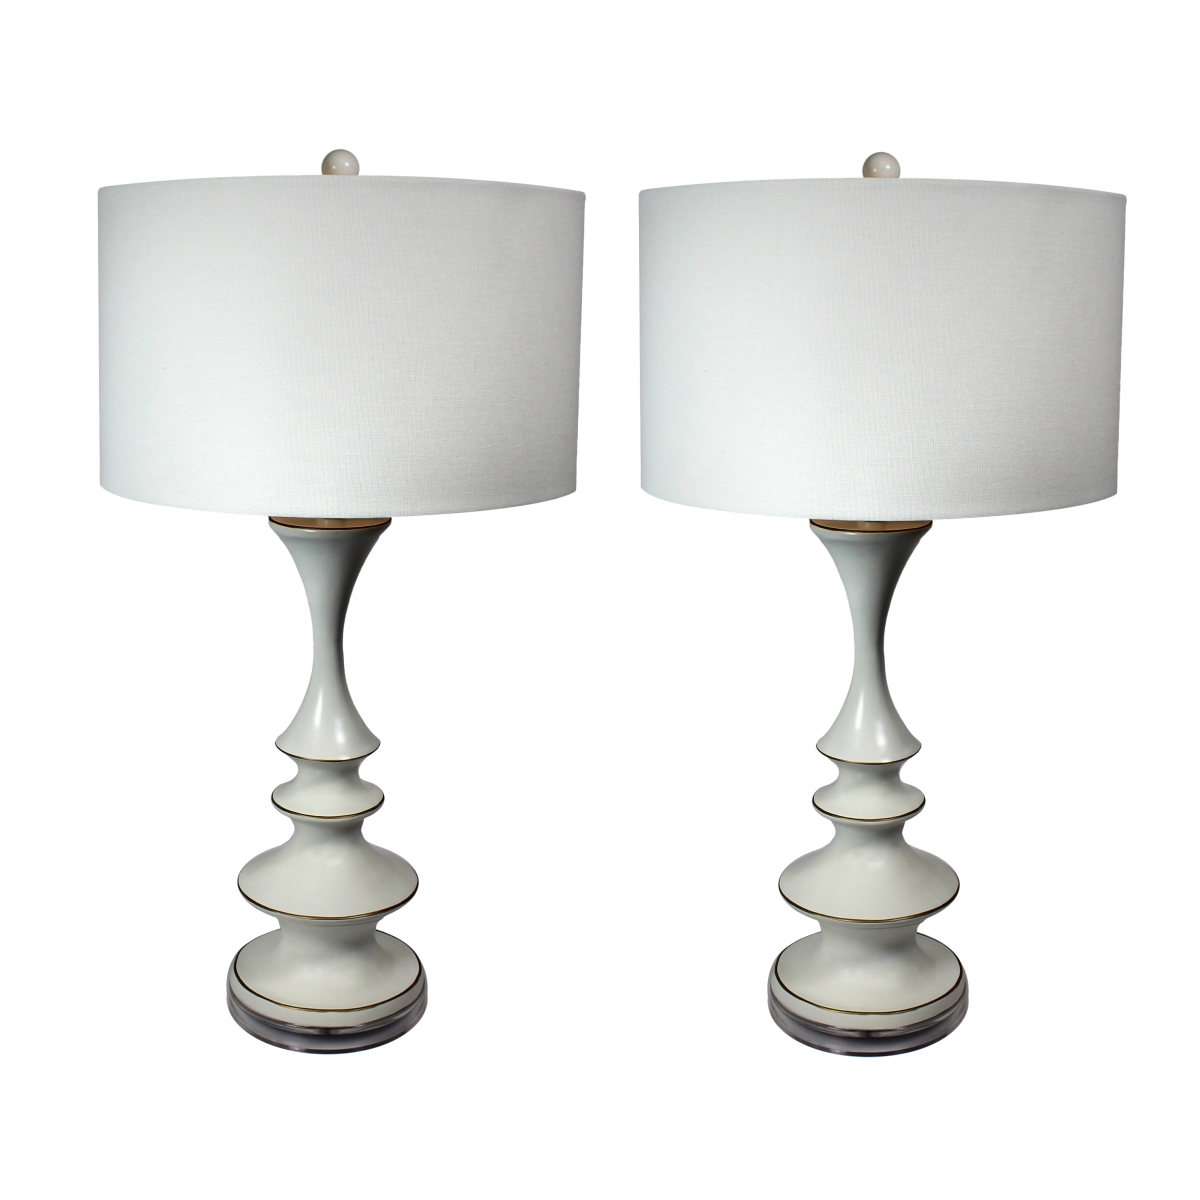 Urban Designs 7735674 Verano Tall Contemporary Table Lamp, White - Set Of 2